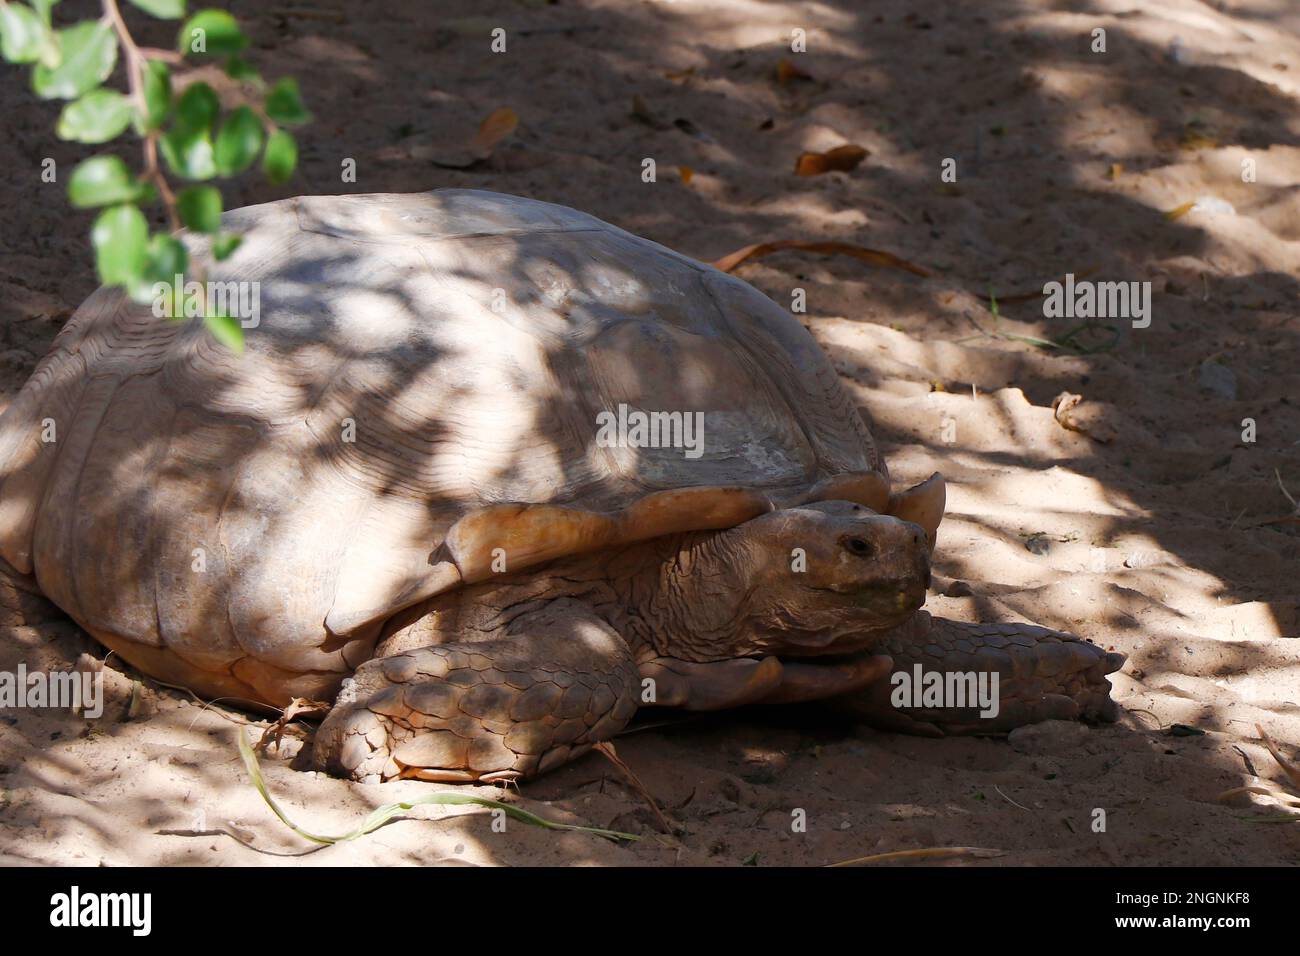 Galápagos giant tortoise is a species of very large tortoise in the genus Chelonoidis. Stock Photo